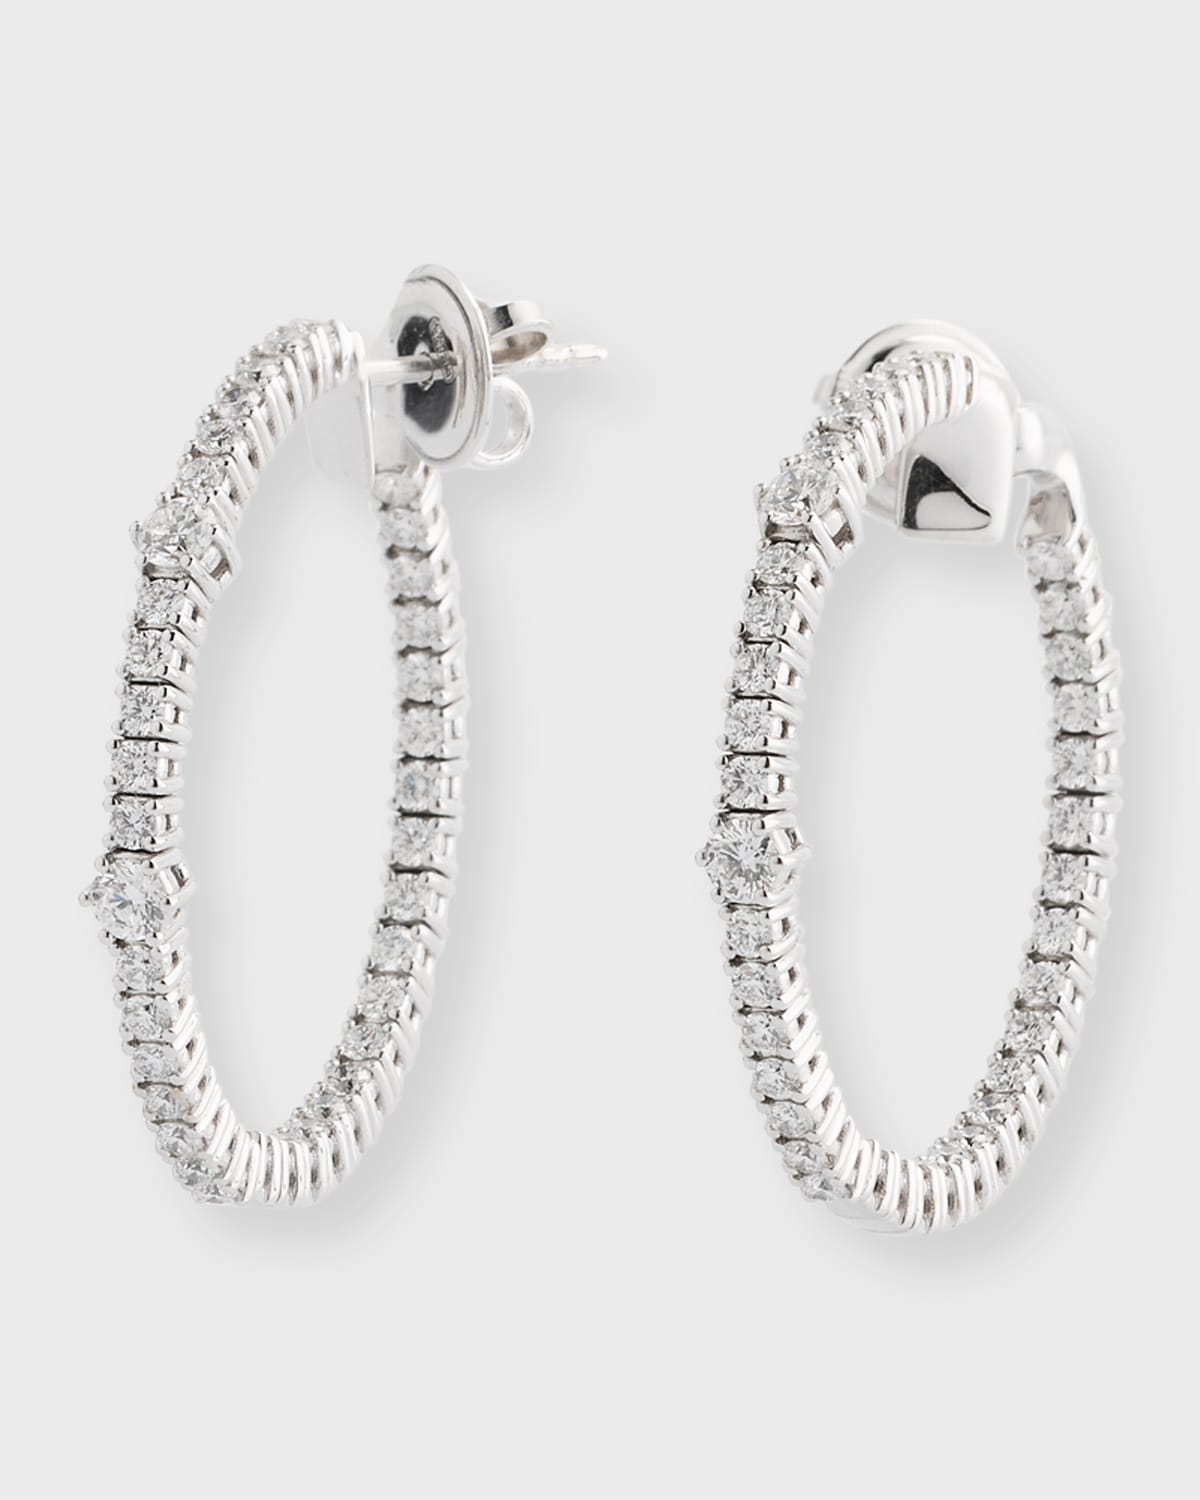 18K White Gold Hoop Earrings with Diamonds, 1.81tcw